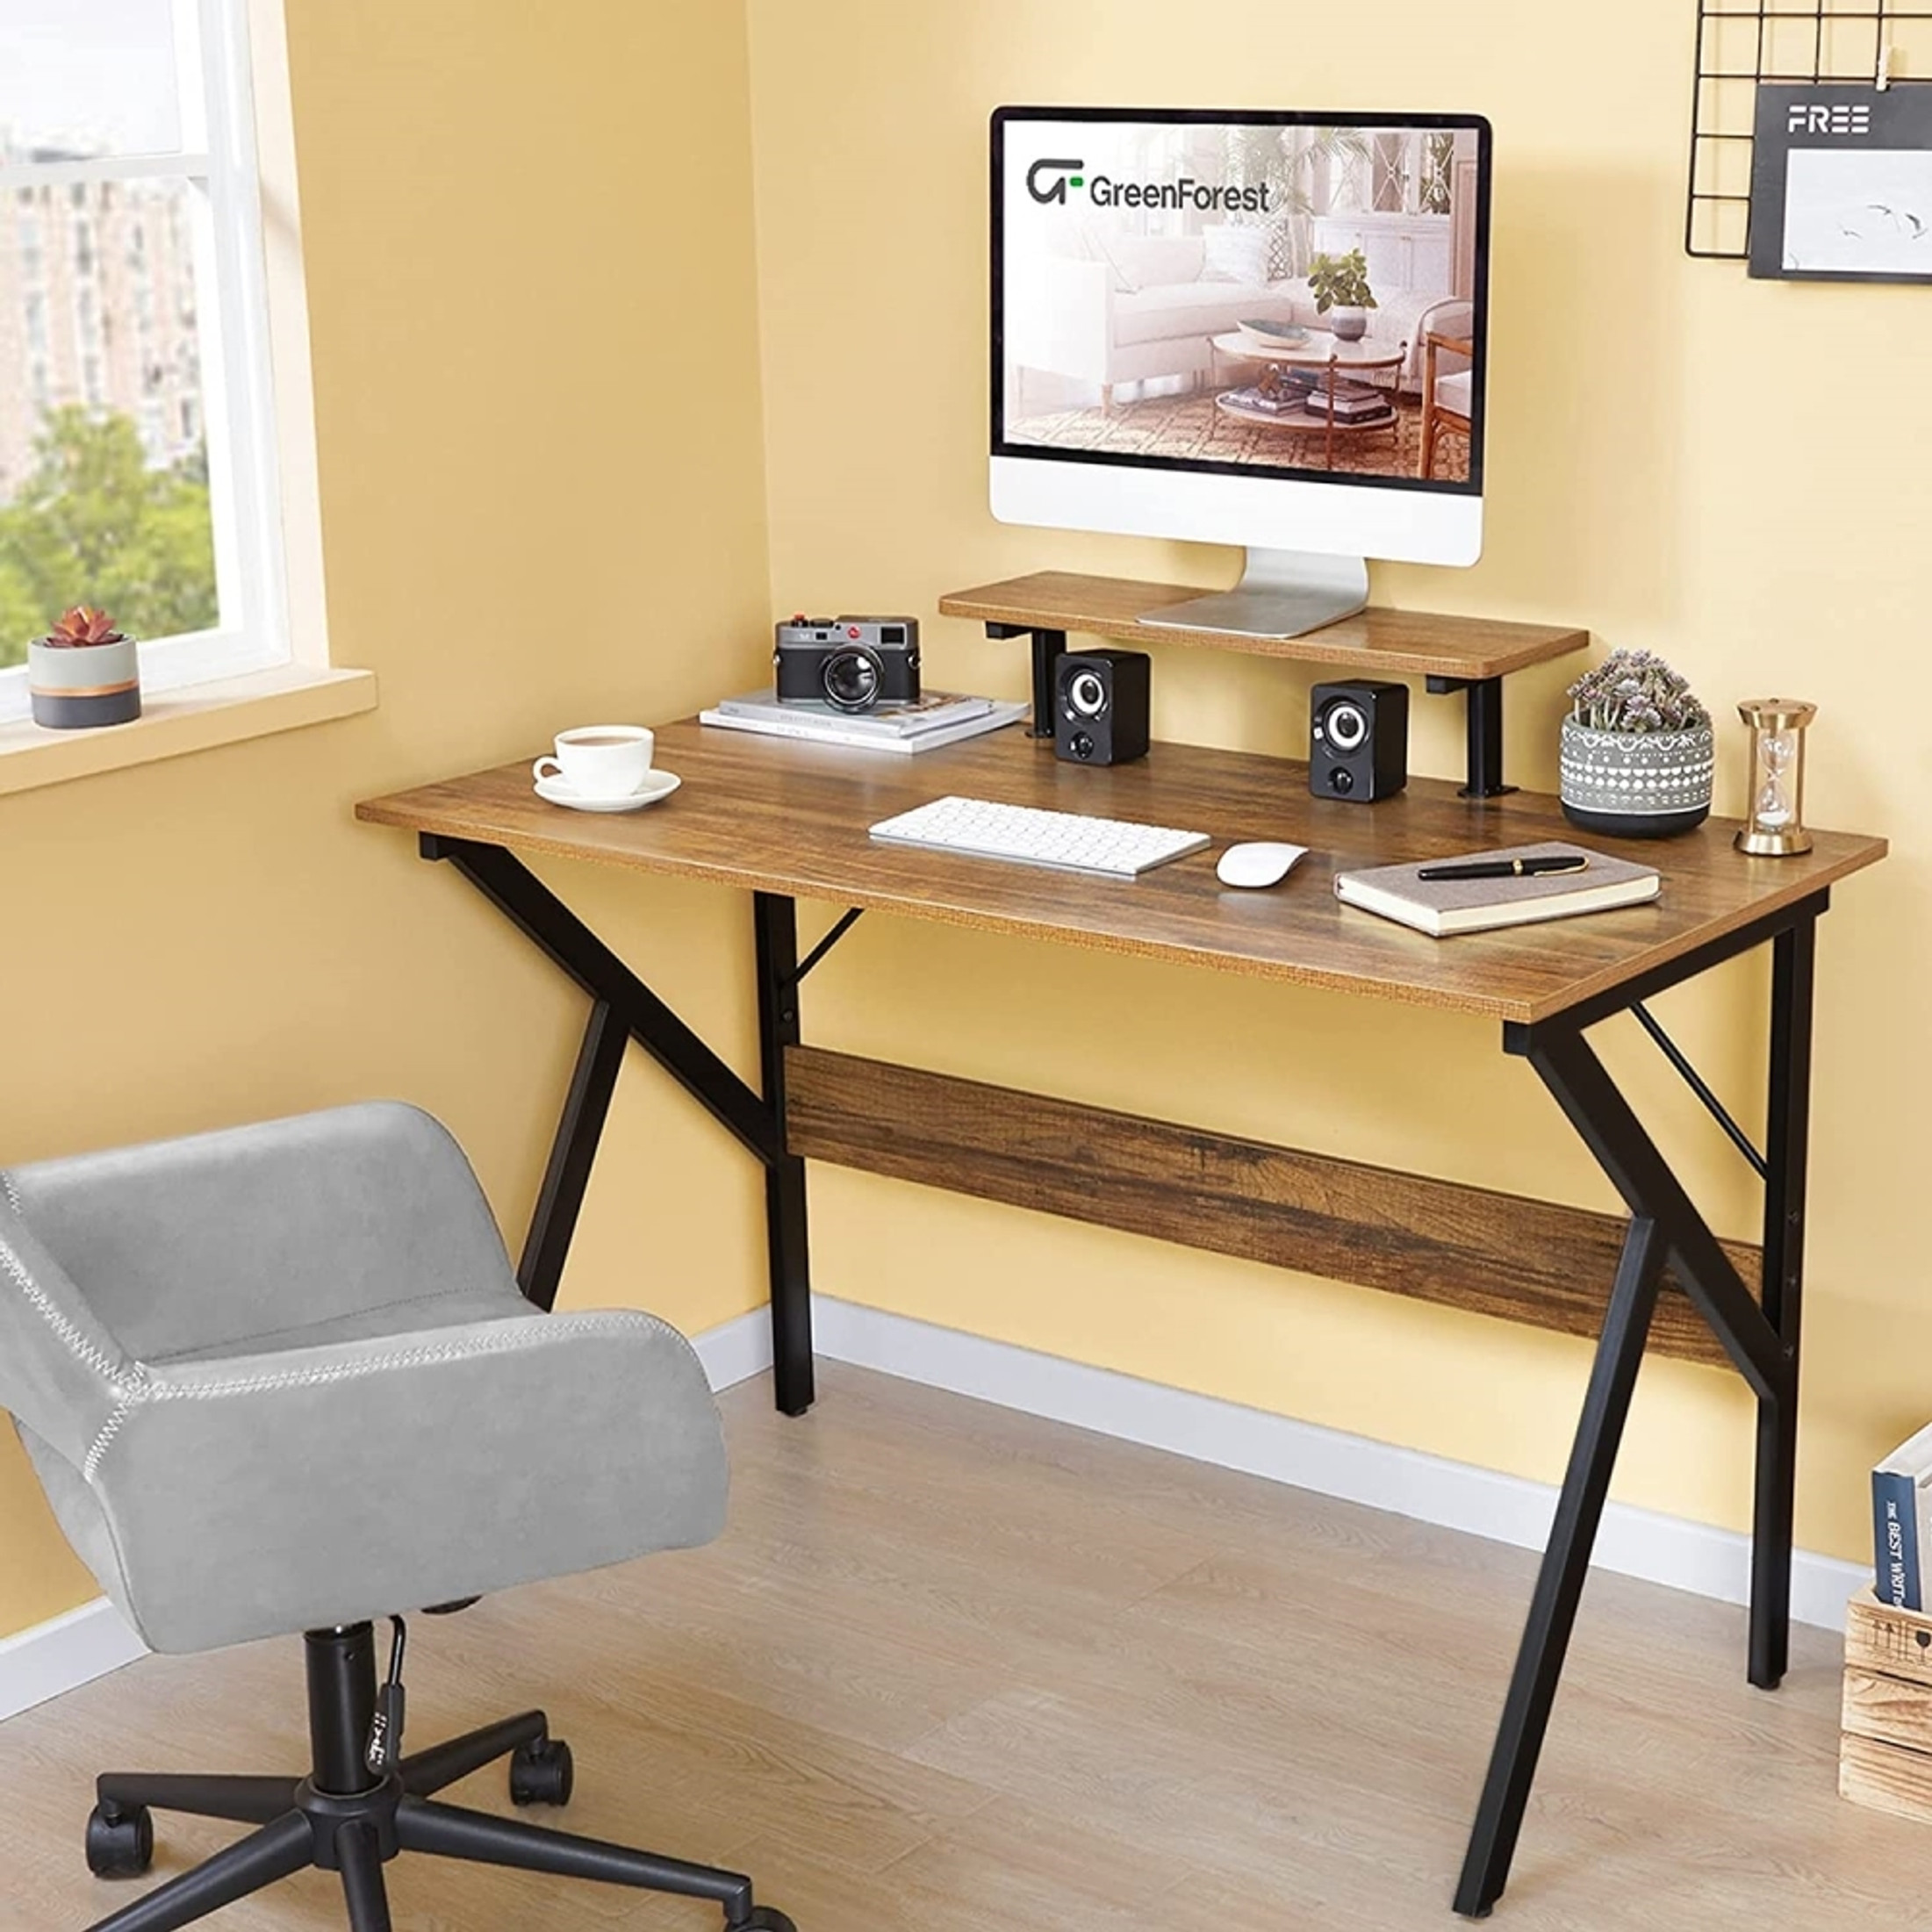 Greenforest Home Office Desk W/ Monitor Shelf, Computer/Gaming Desk, Walnut, 47"